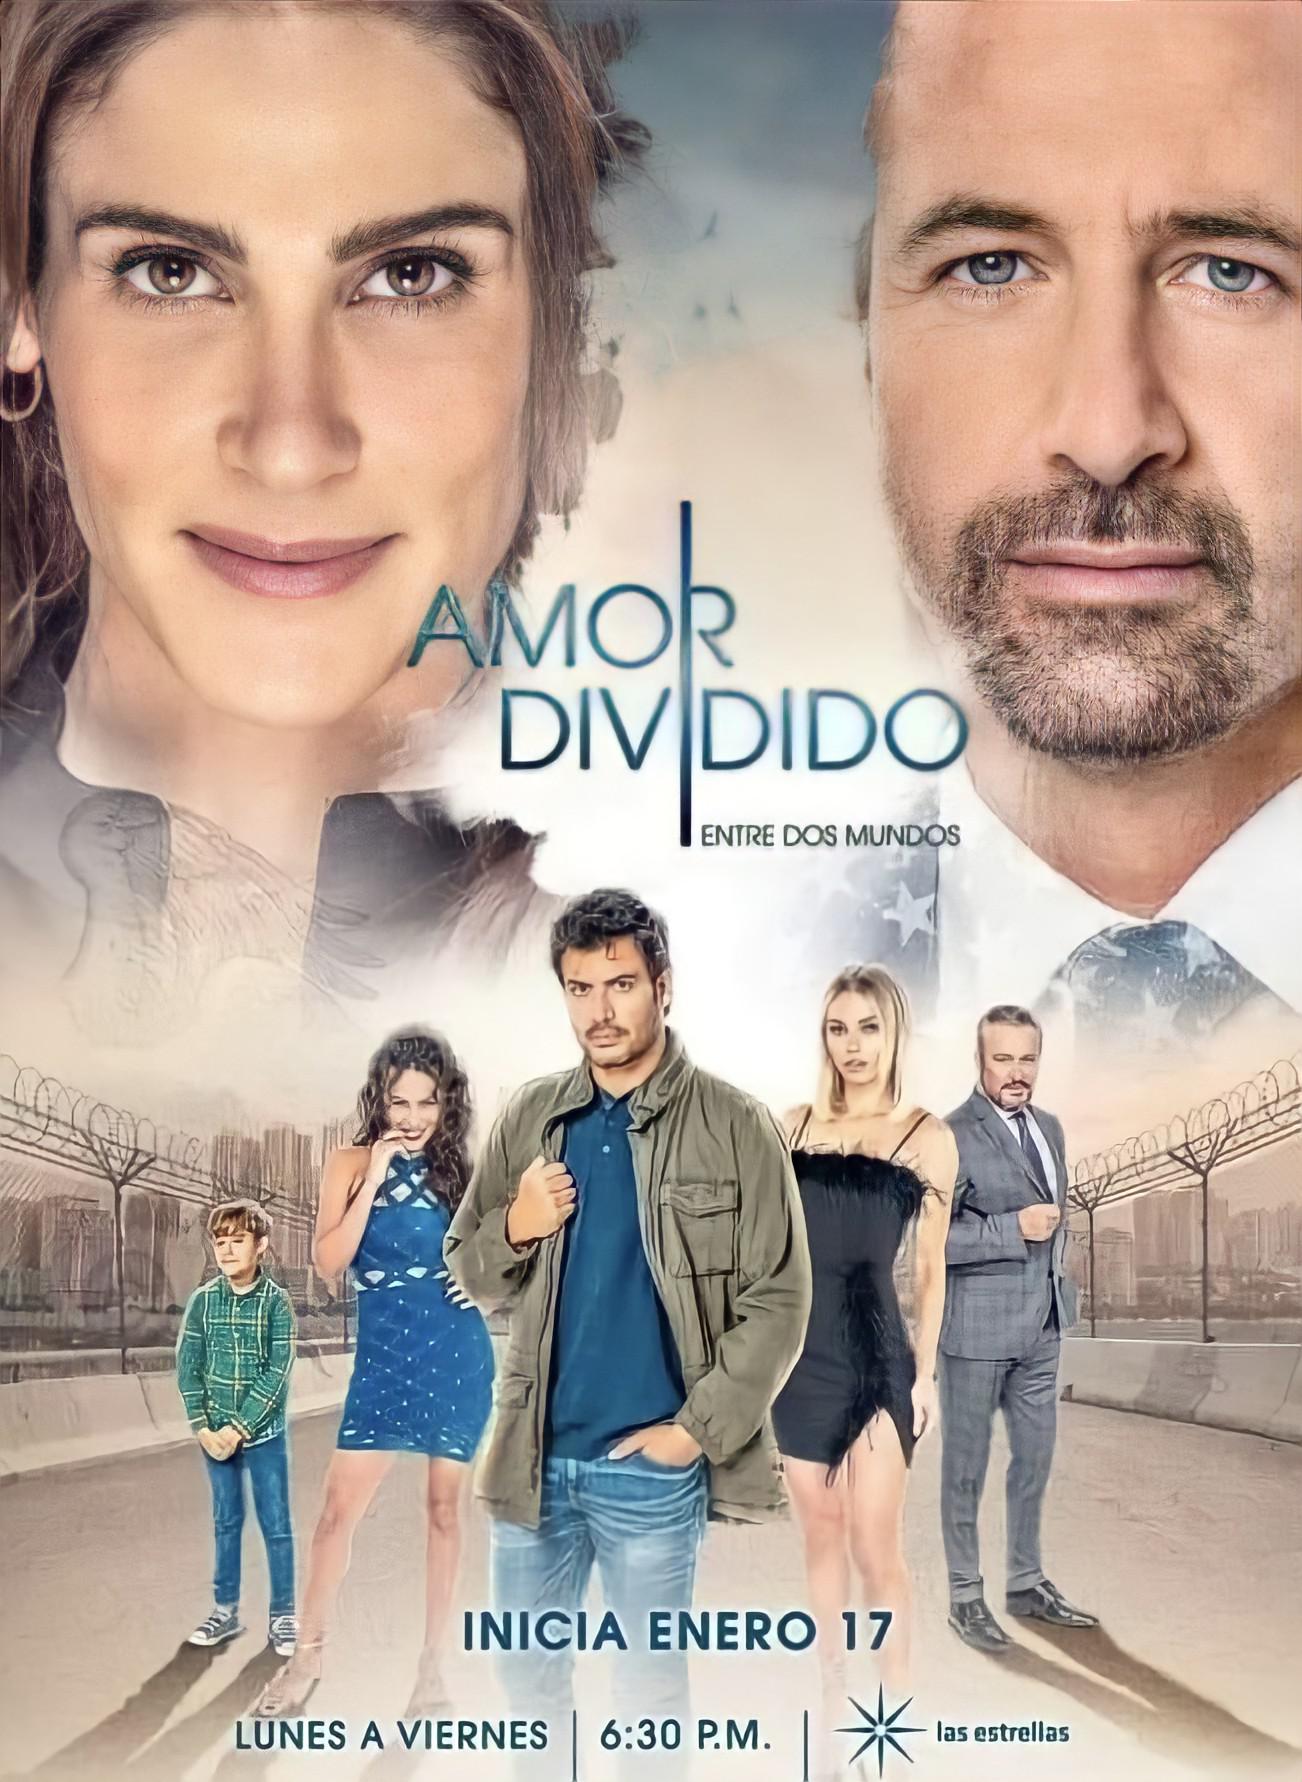 TV ratings for Amor Dividido in the United Kingdom. Las Estrellas TV series